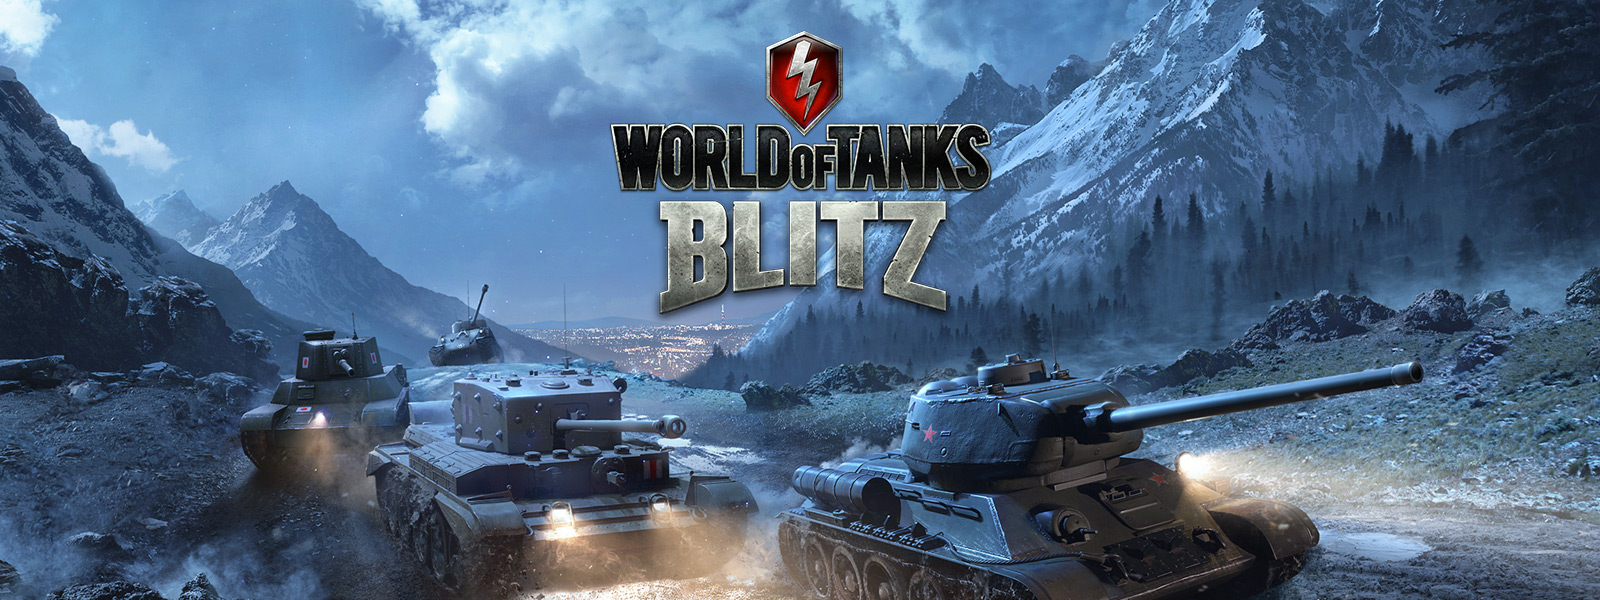 world of tanks blitz cross platform xbox pc